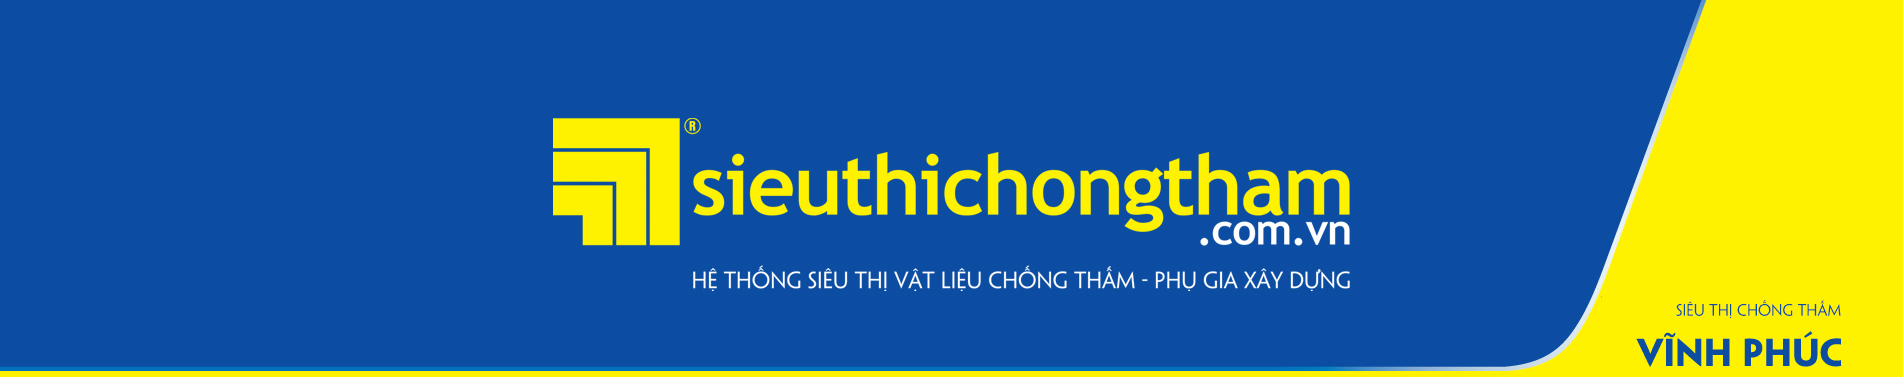 Siu thi Chong tham Vinh Phuc